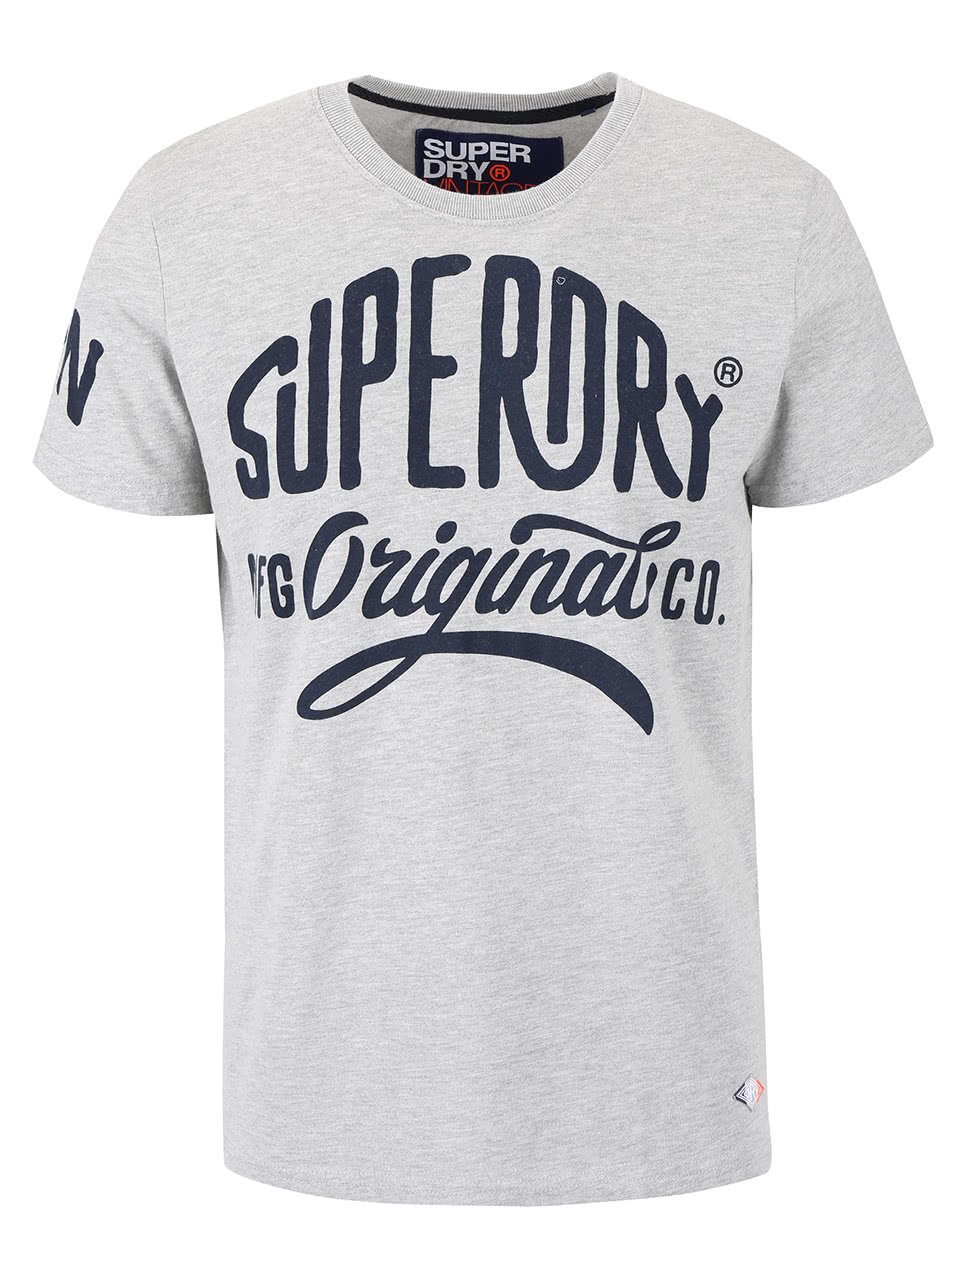 Šedé pánské triko s nápisem Superdry